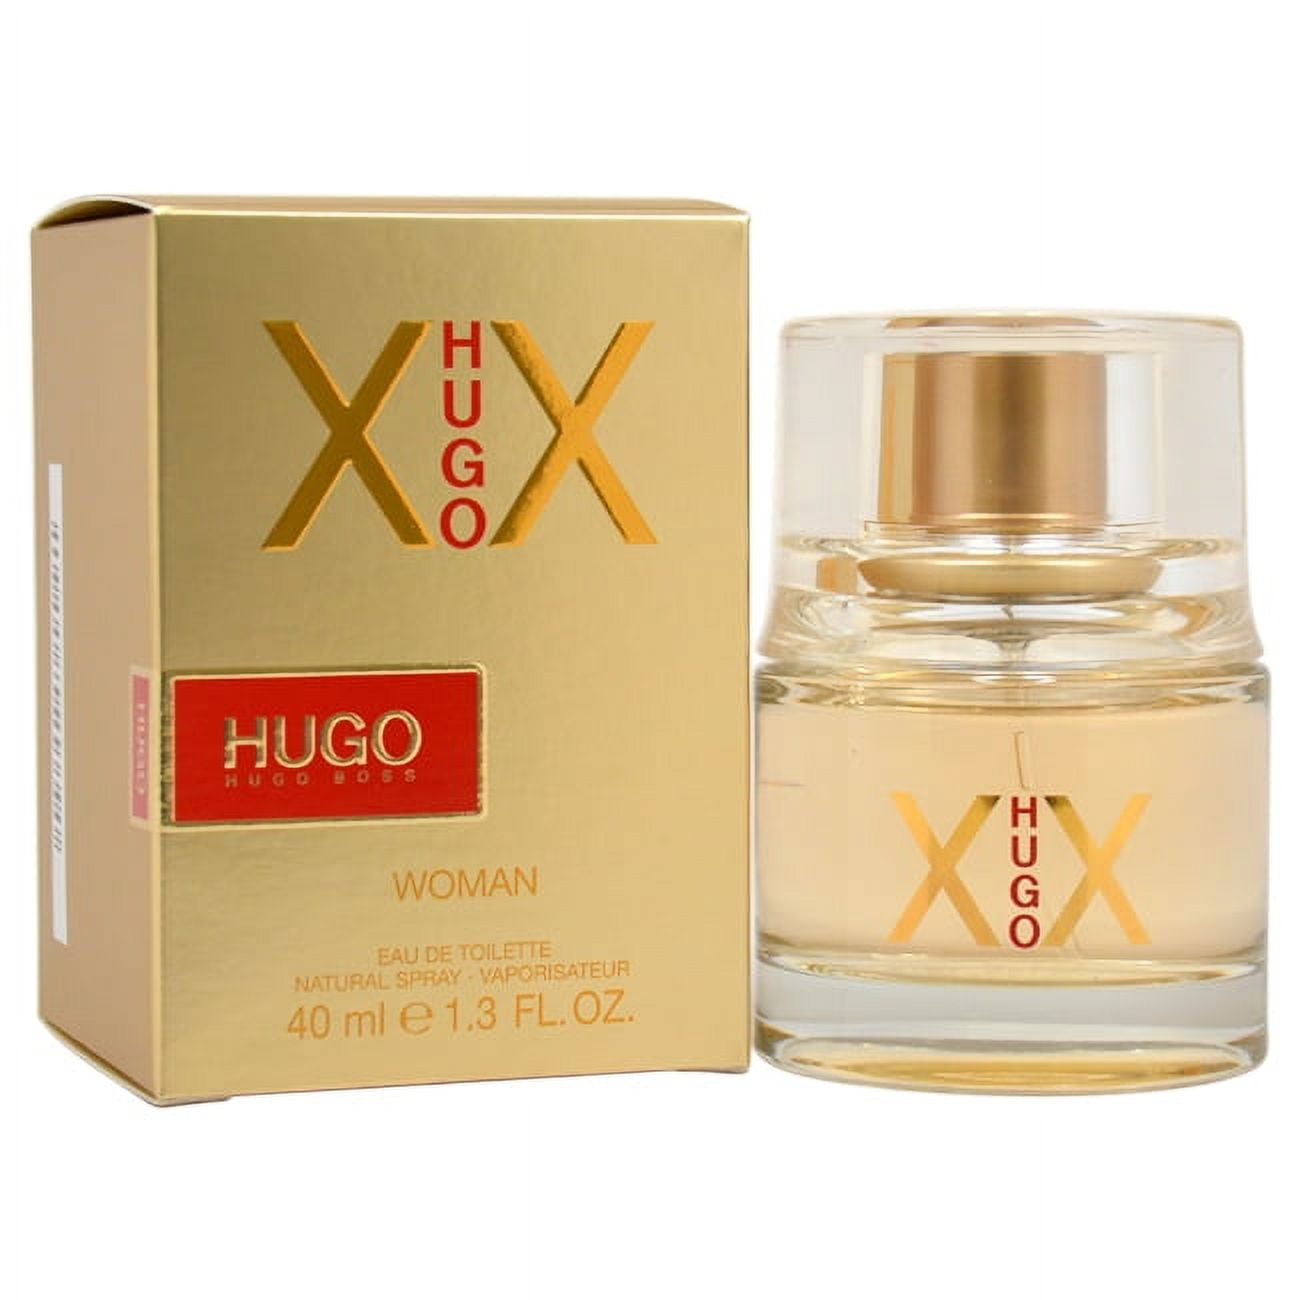 HUGO BOSS Hugo Perfume XX Toilette, Oz Eau Women, 1.3 for de